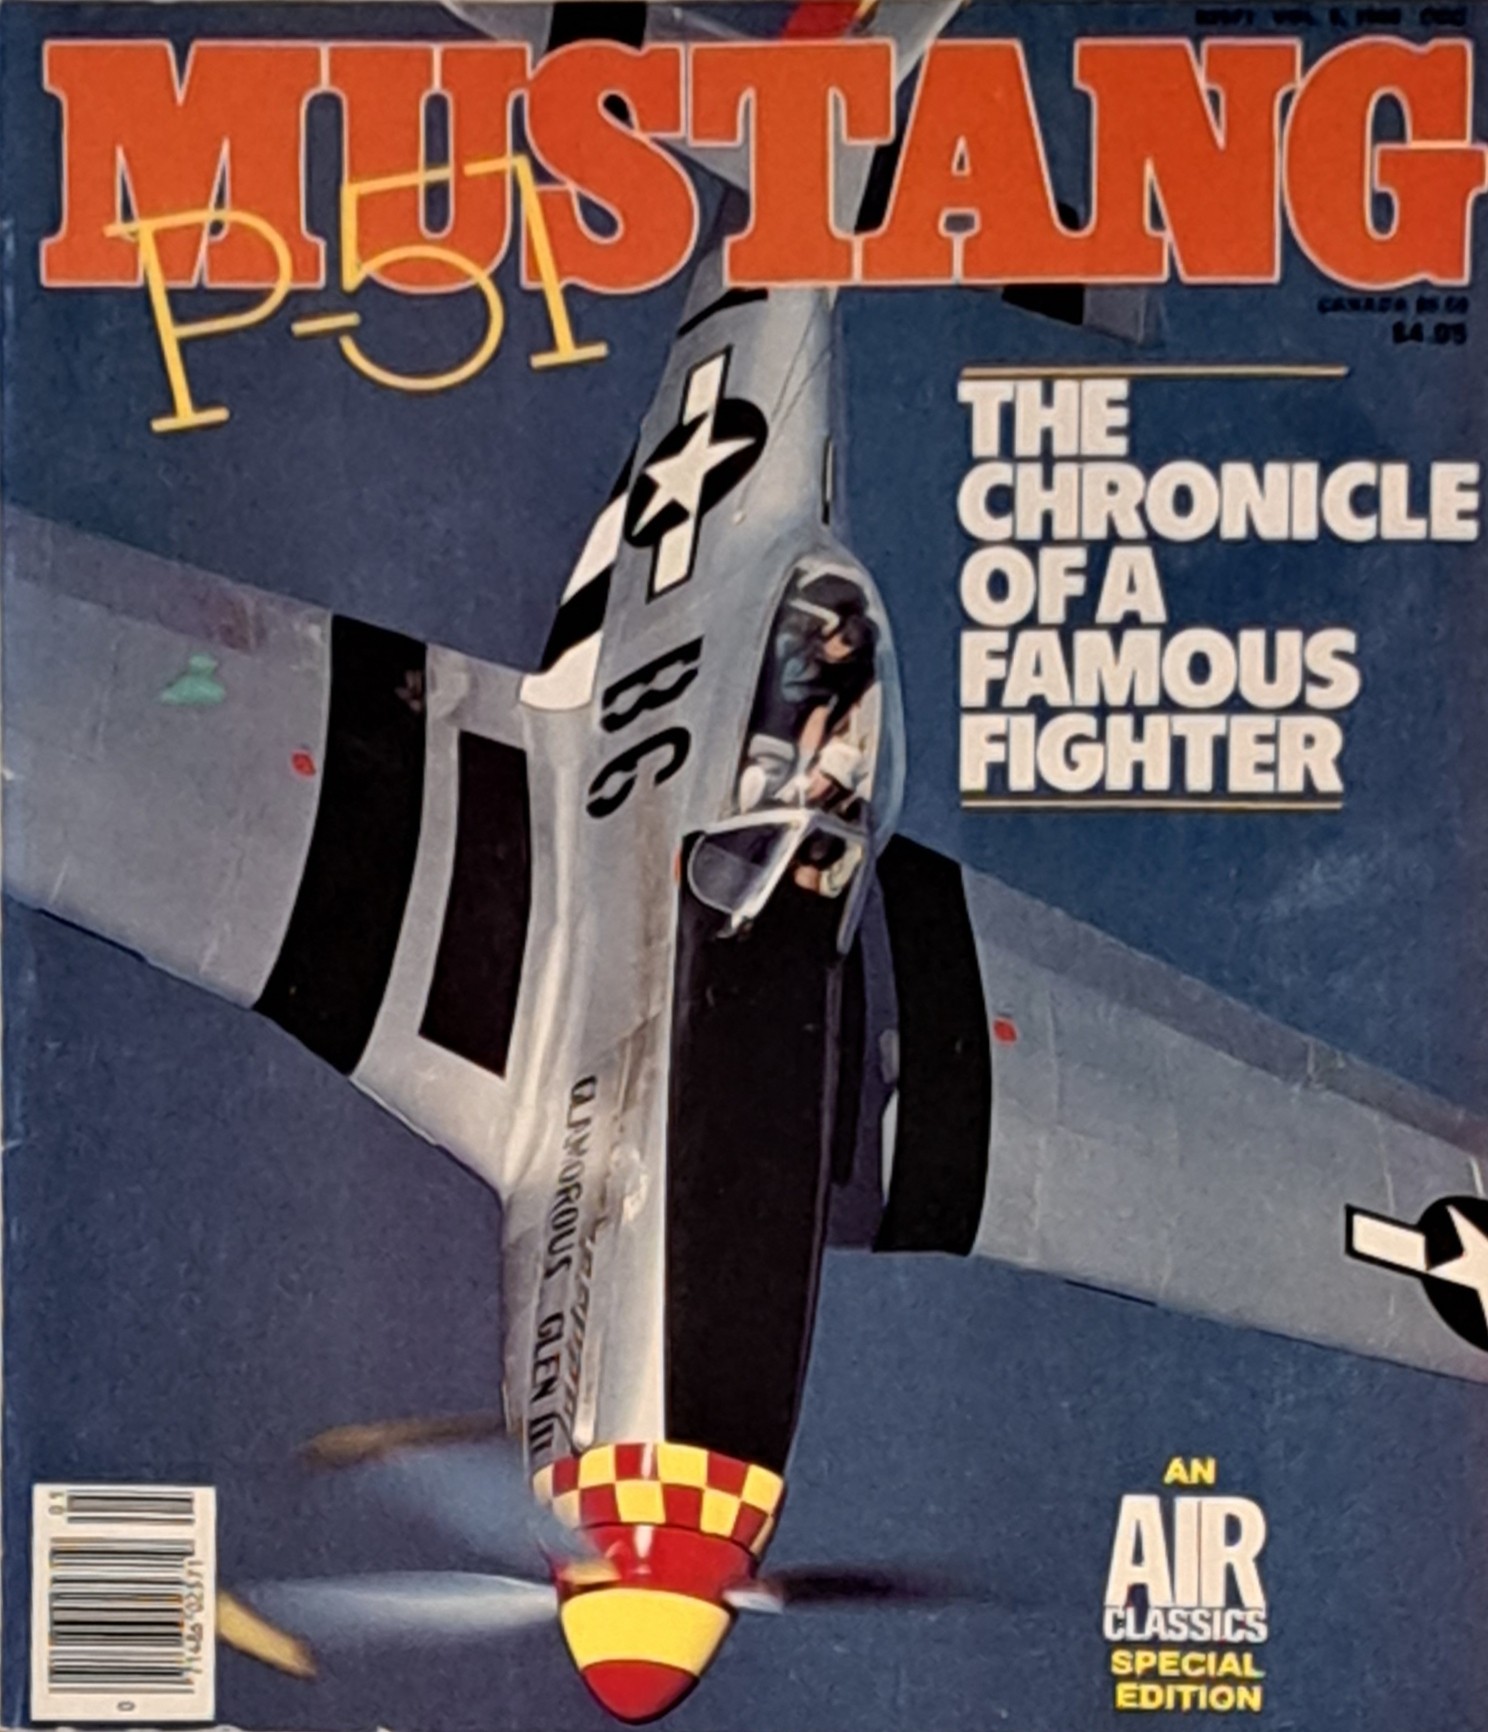 Air classics special: P-51 Mustang